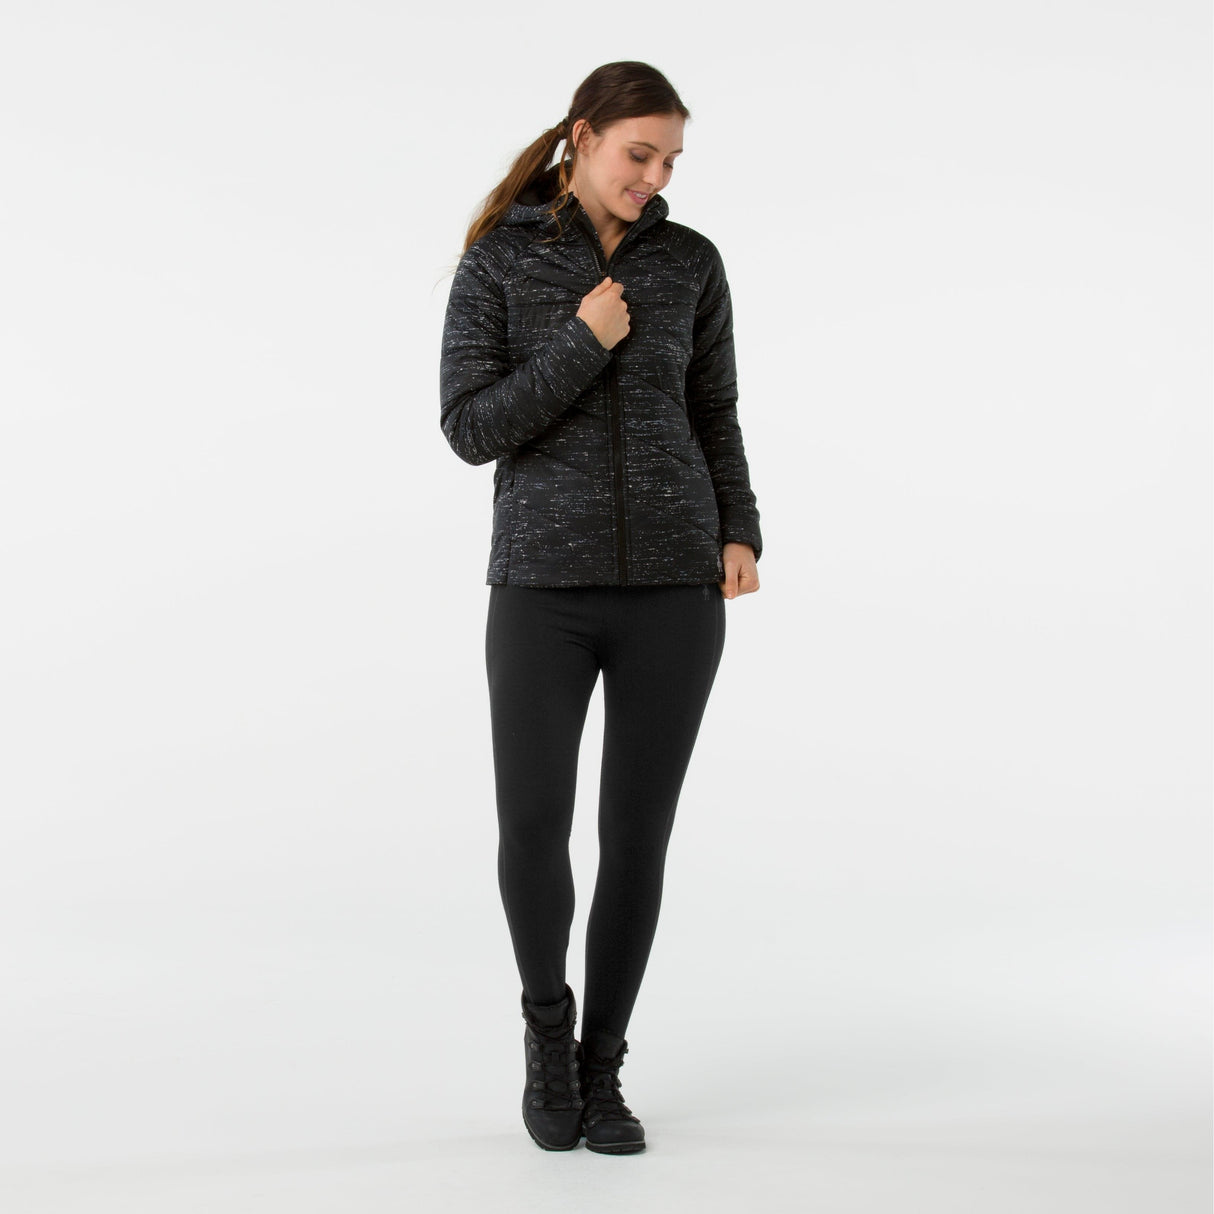 Smartwool Womens Smartloft 150 Hooded Jacket  -  Small / Black/Light Gray